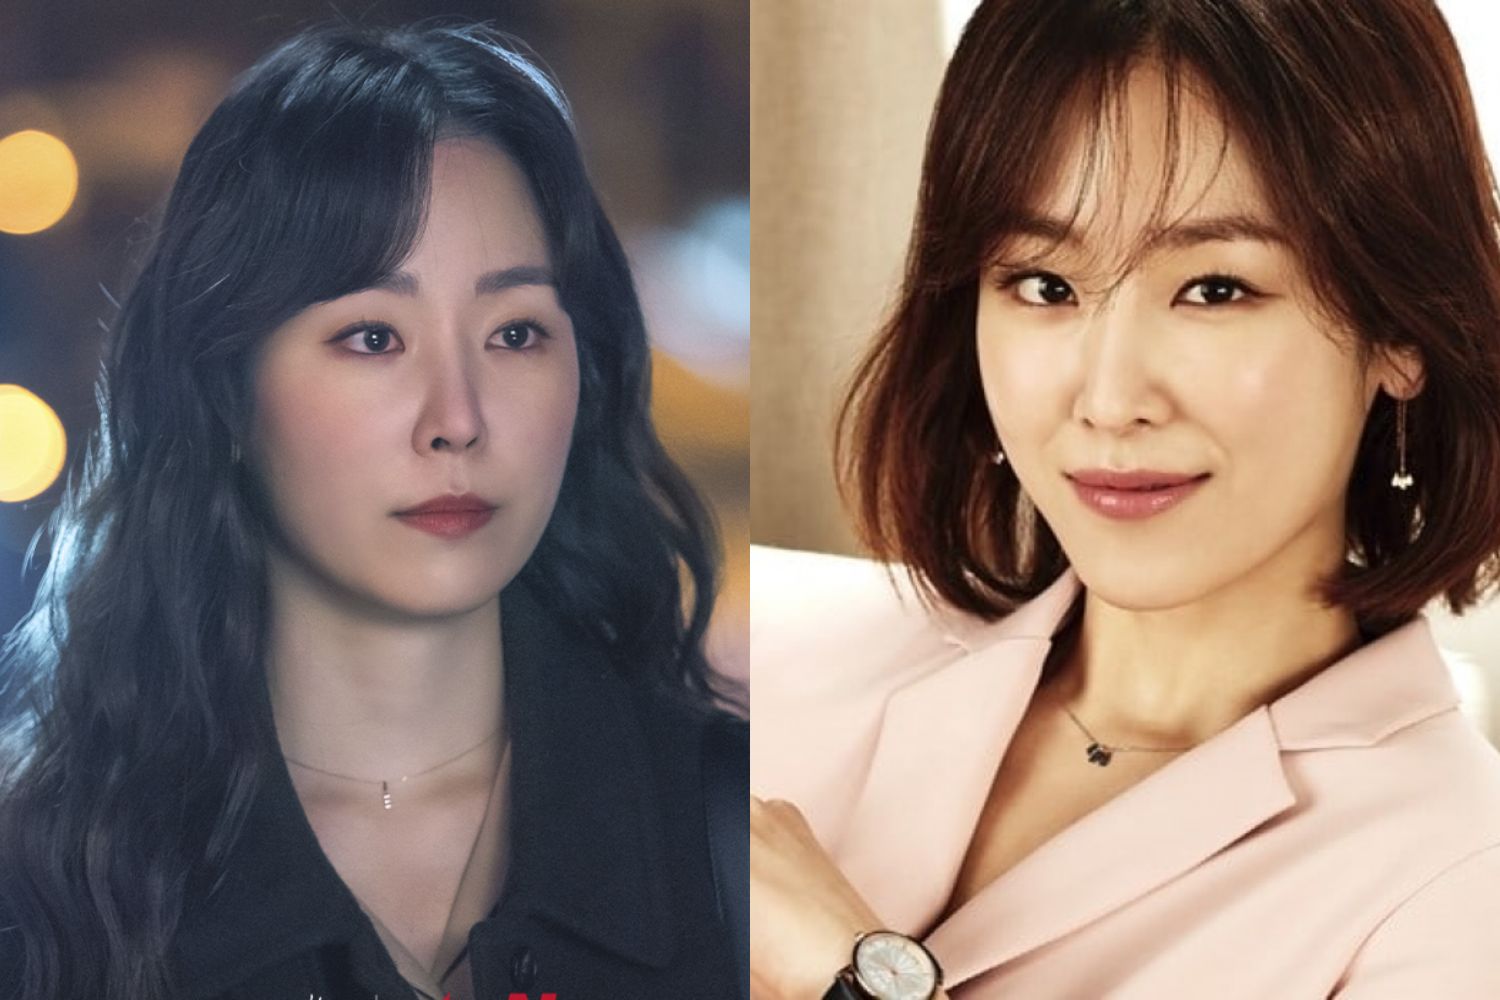 'Why Her?' Lead Protagonist Seo Hyun Jin